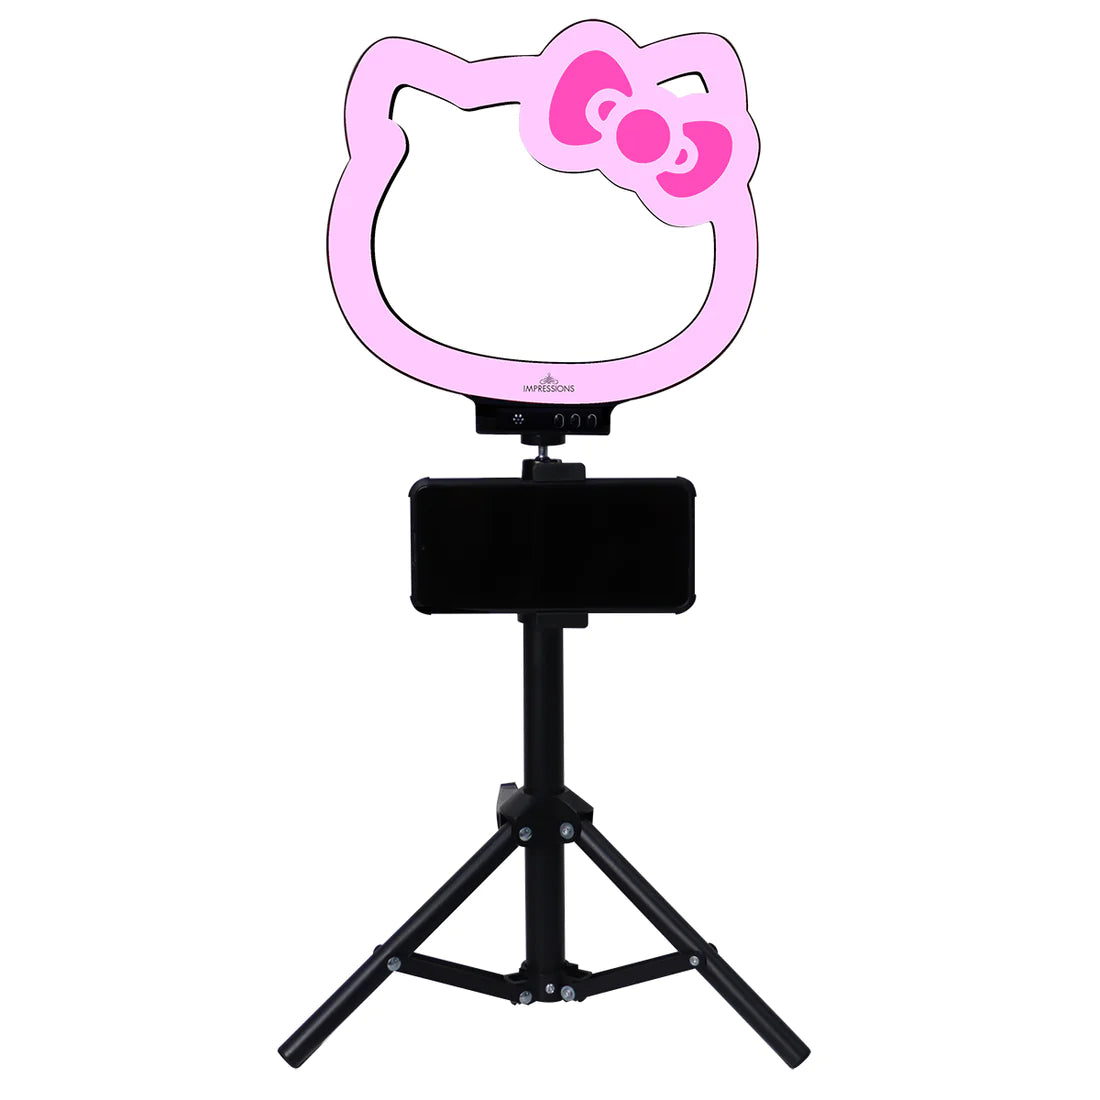 Impressions Vanity - Hello Kitty Supercute 10” RGB Desktop Ring Light with Tripod